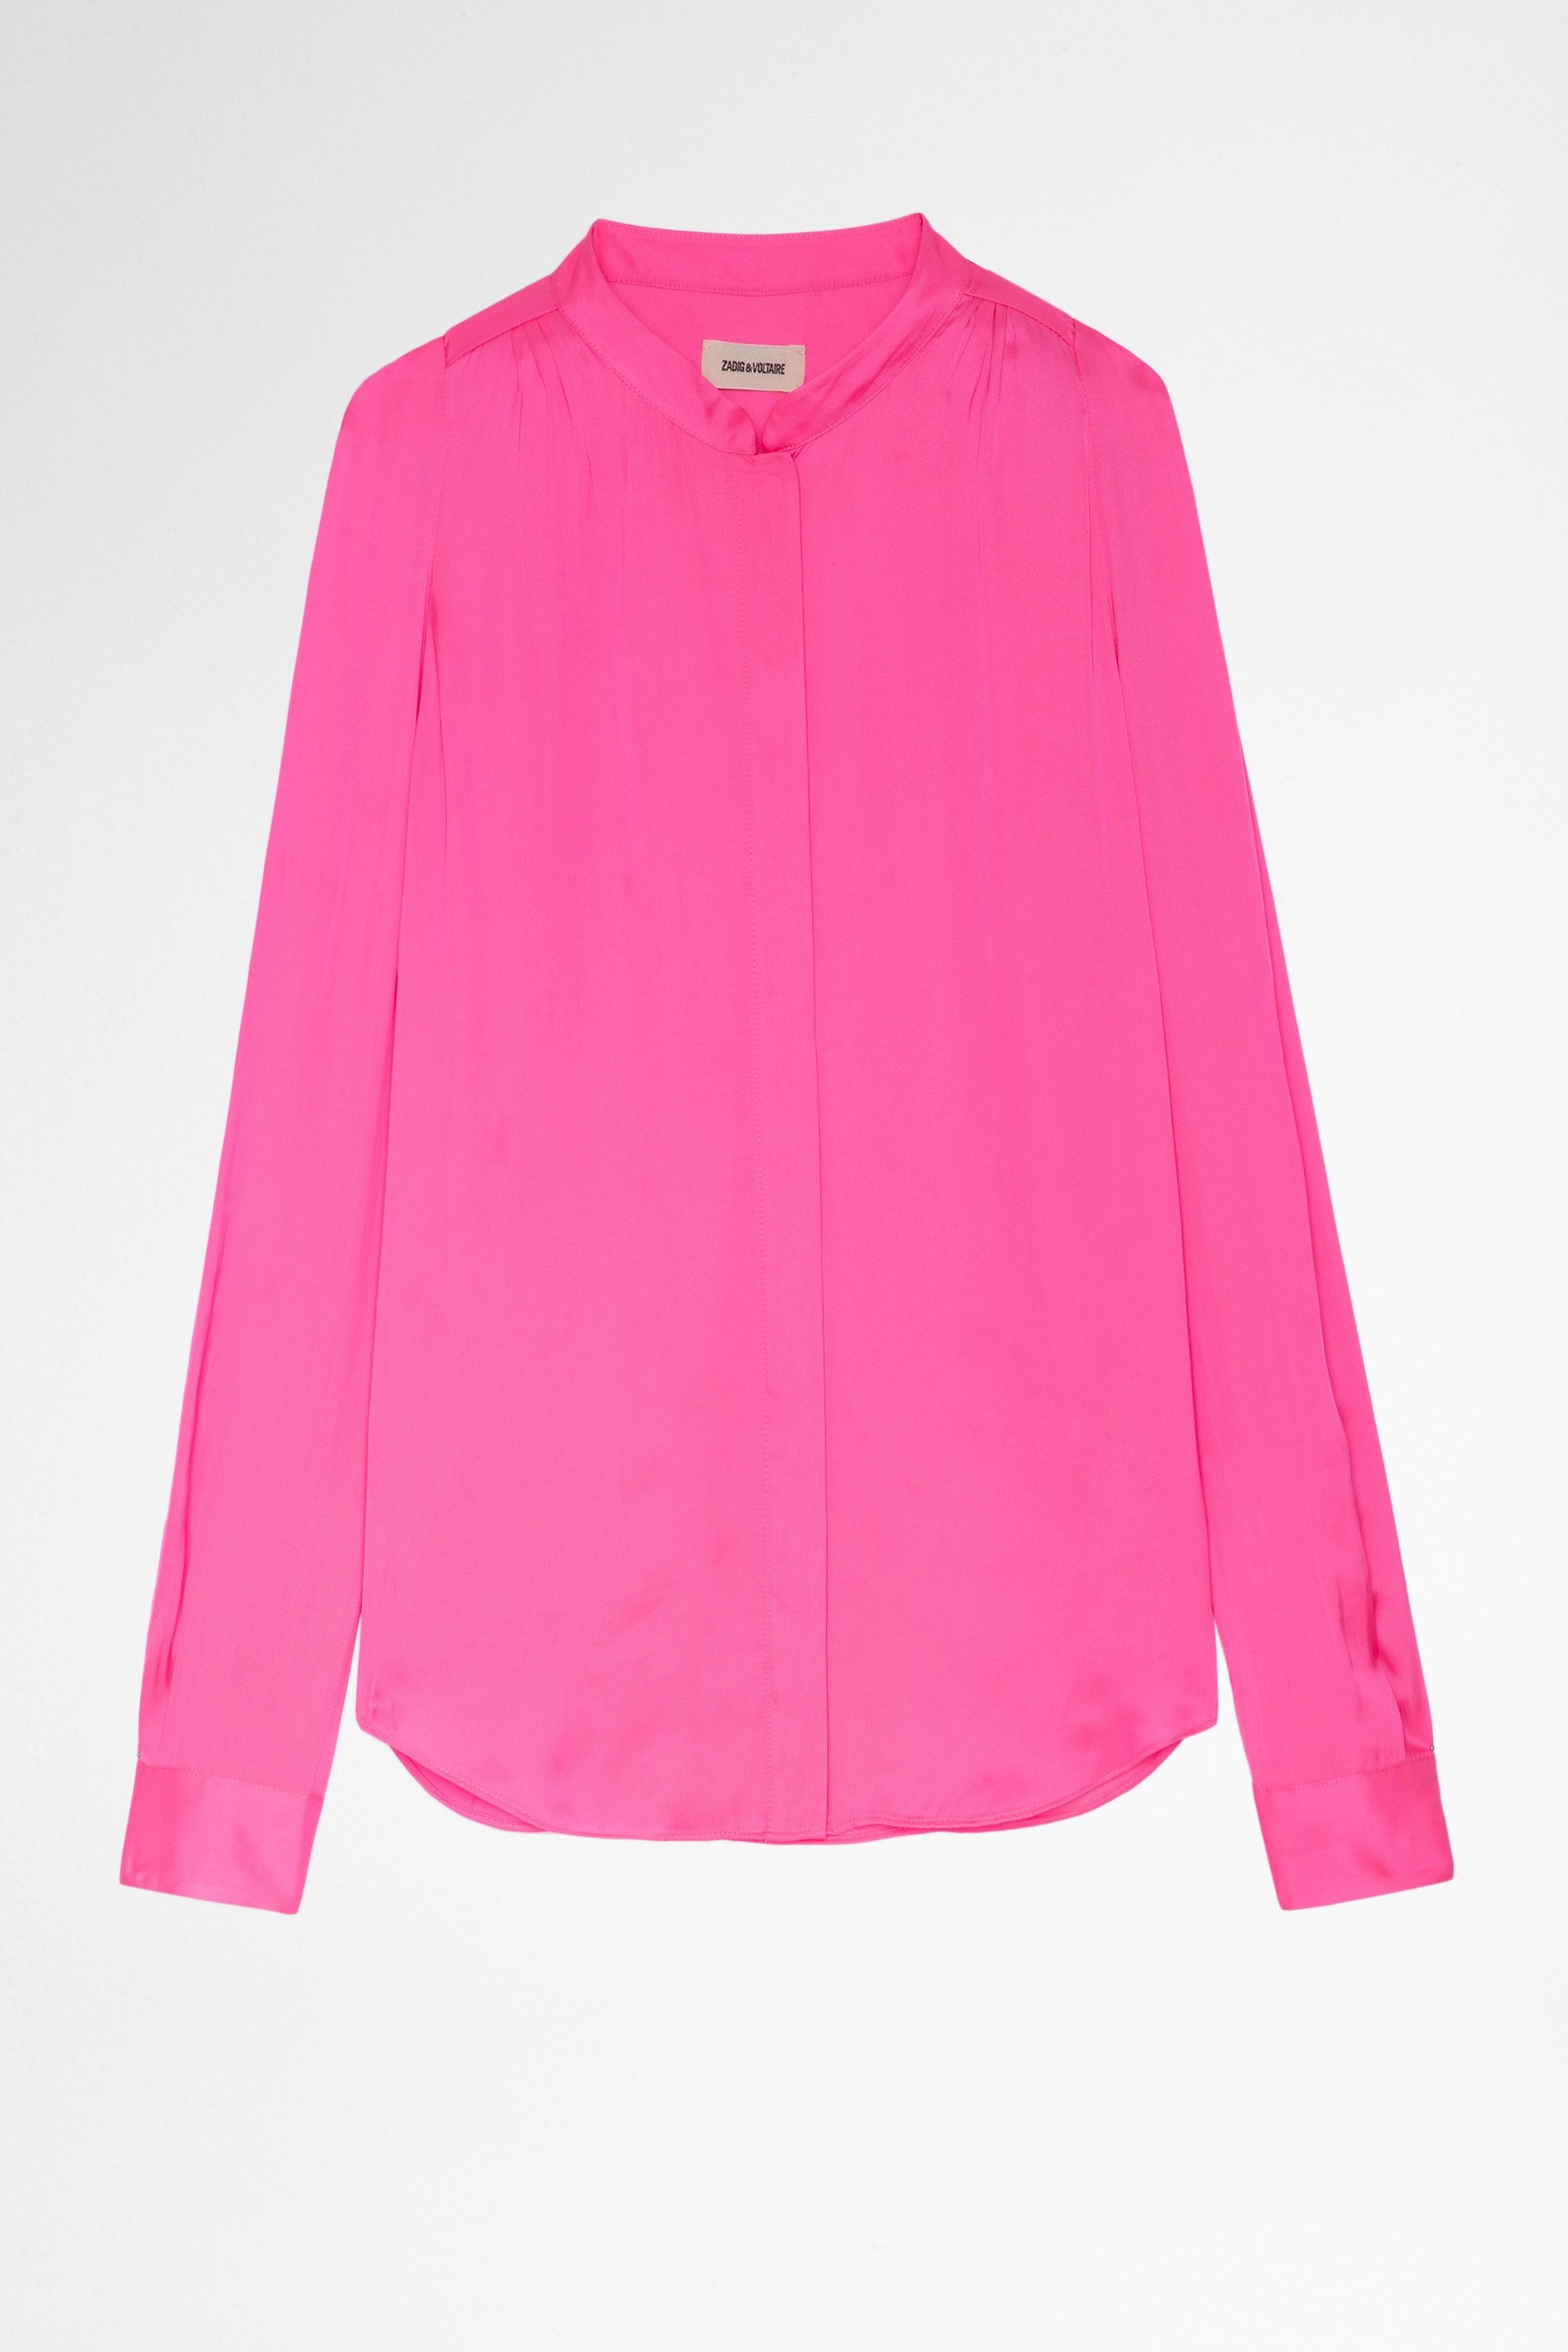 Touchy シャツ Women's long-sleeved pink satin shirt